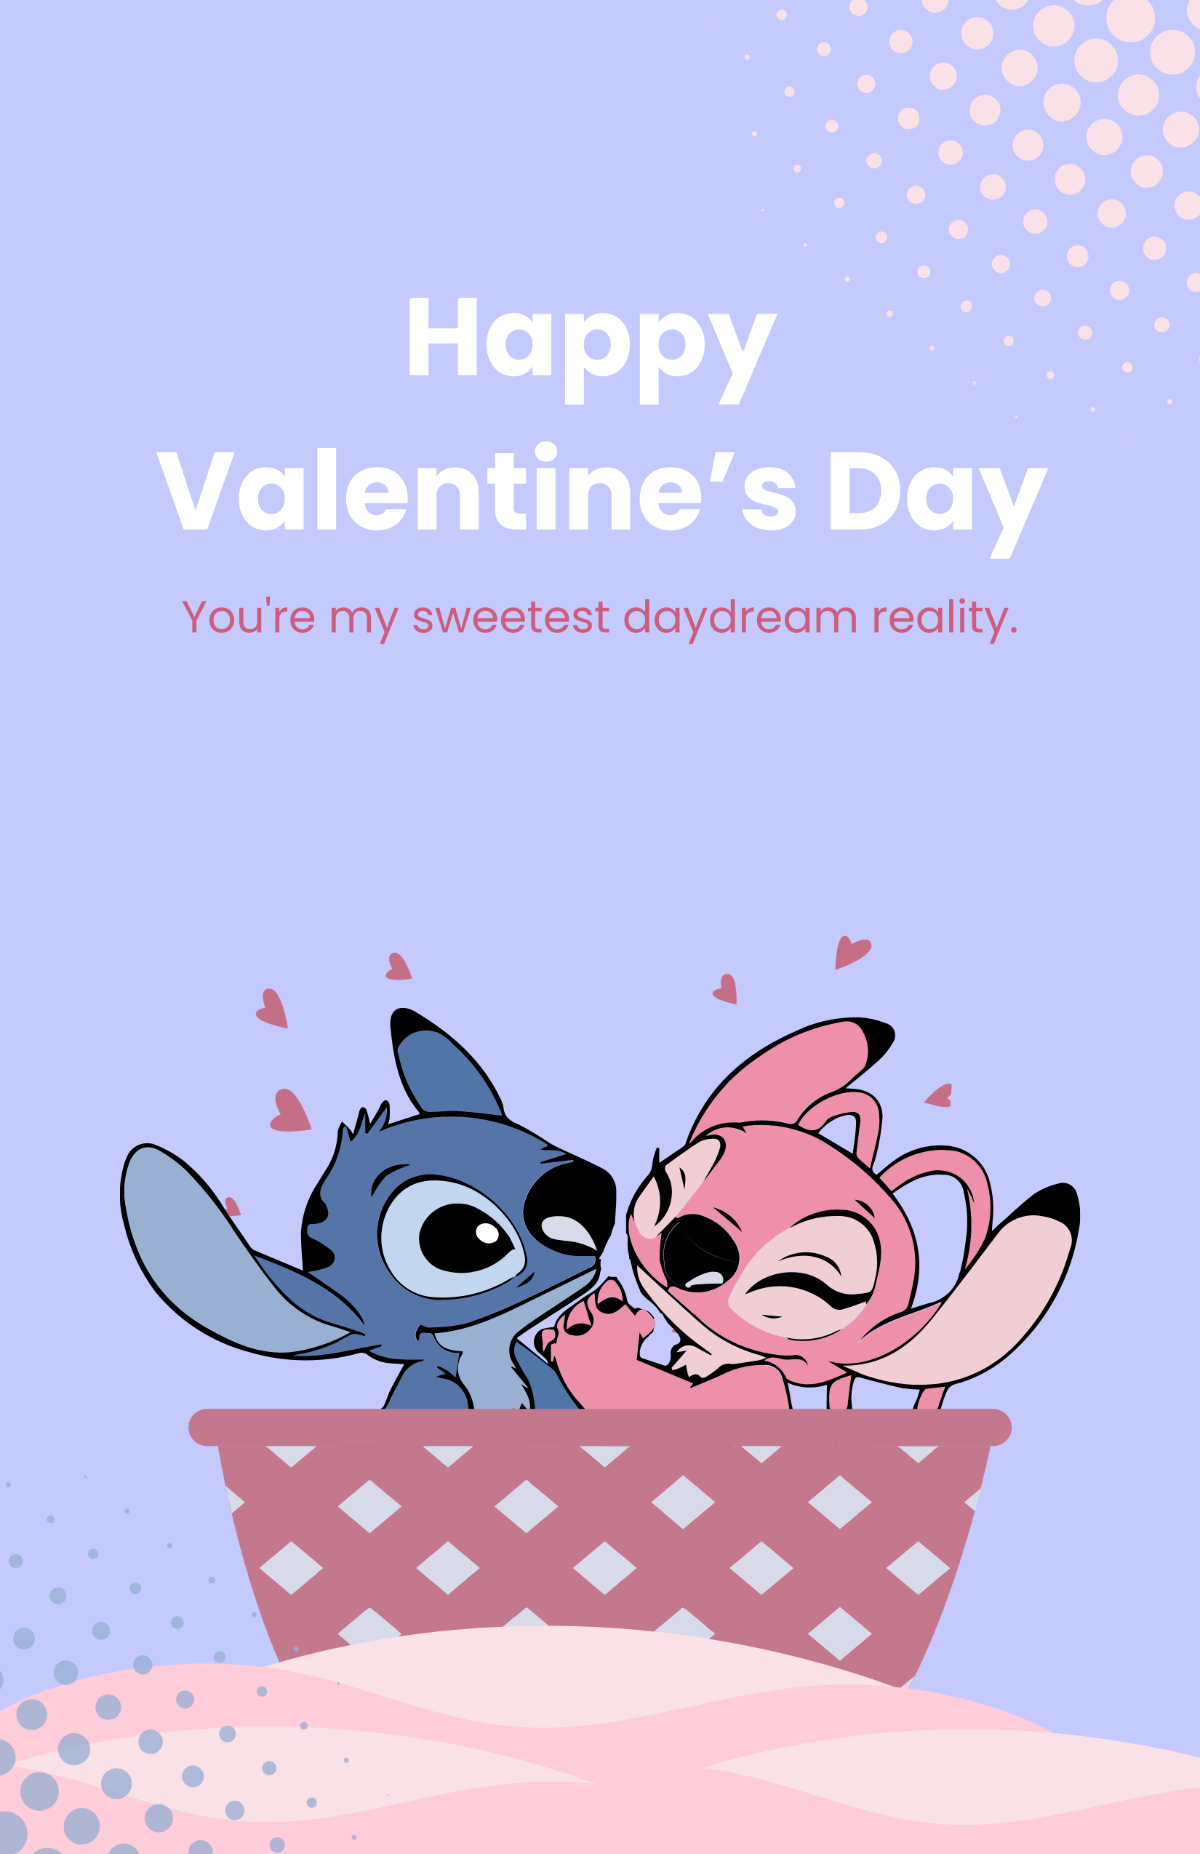 Cute Stitch Wallpaper for Valentine's Day Template